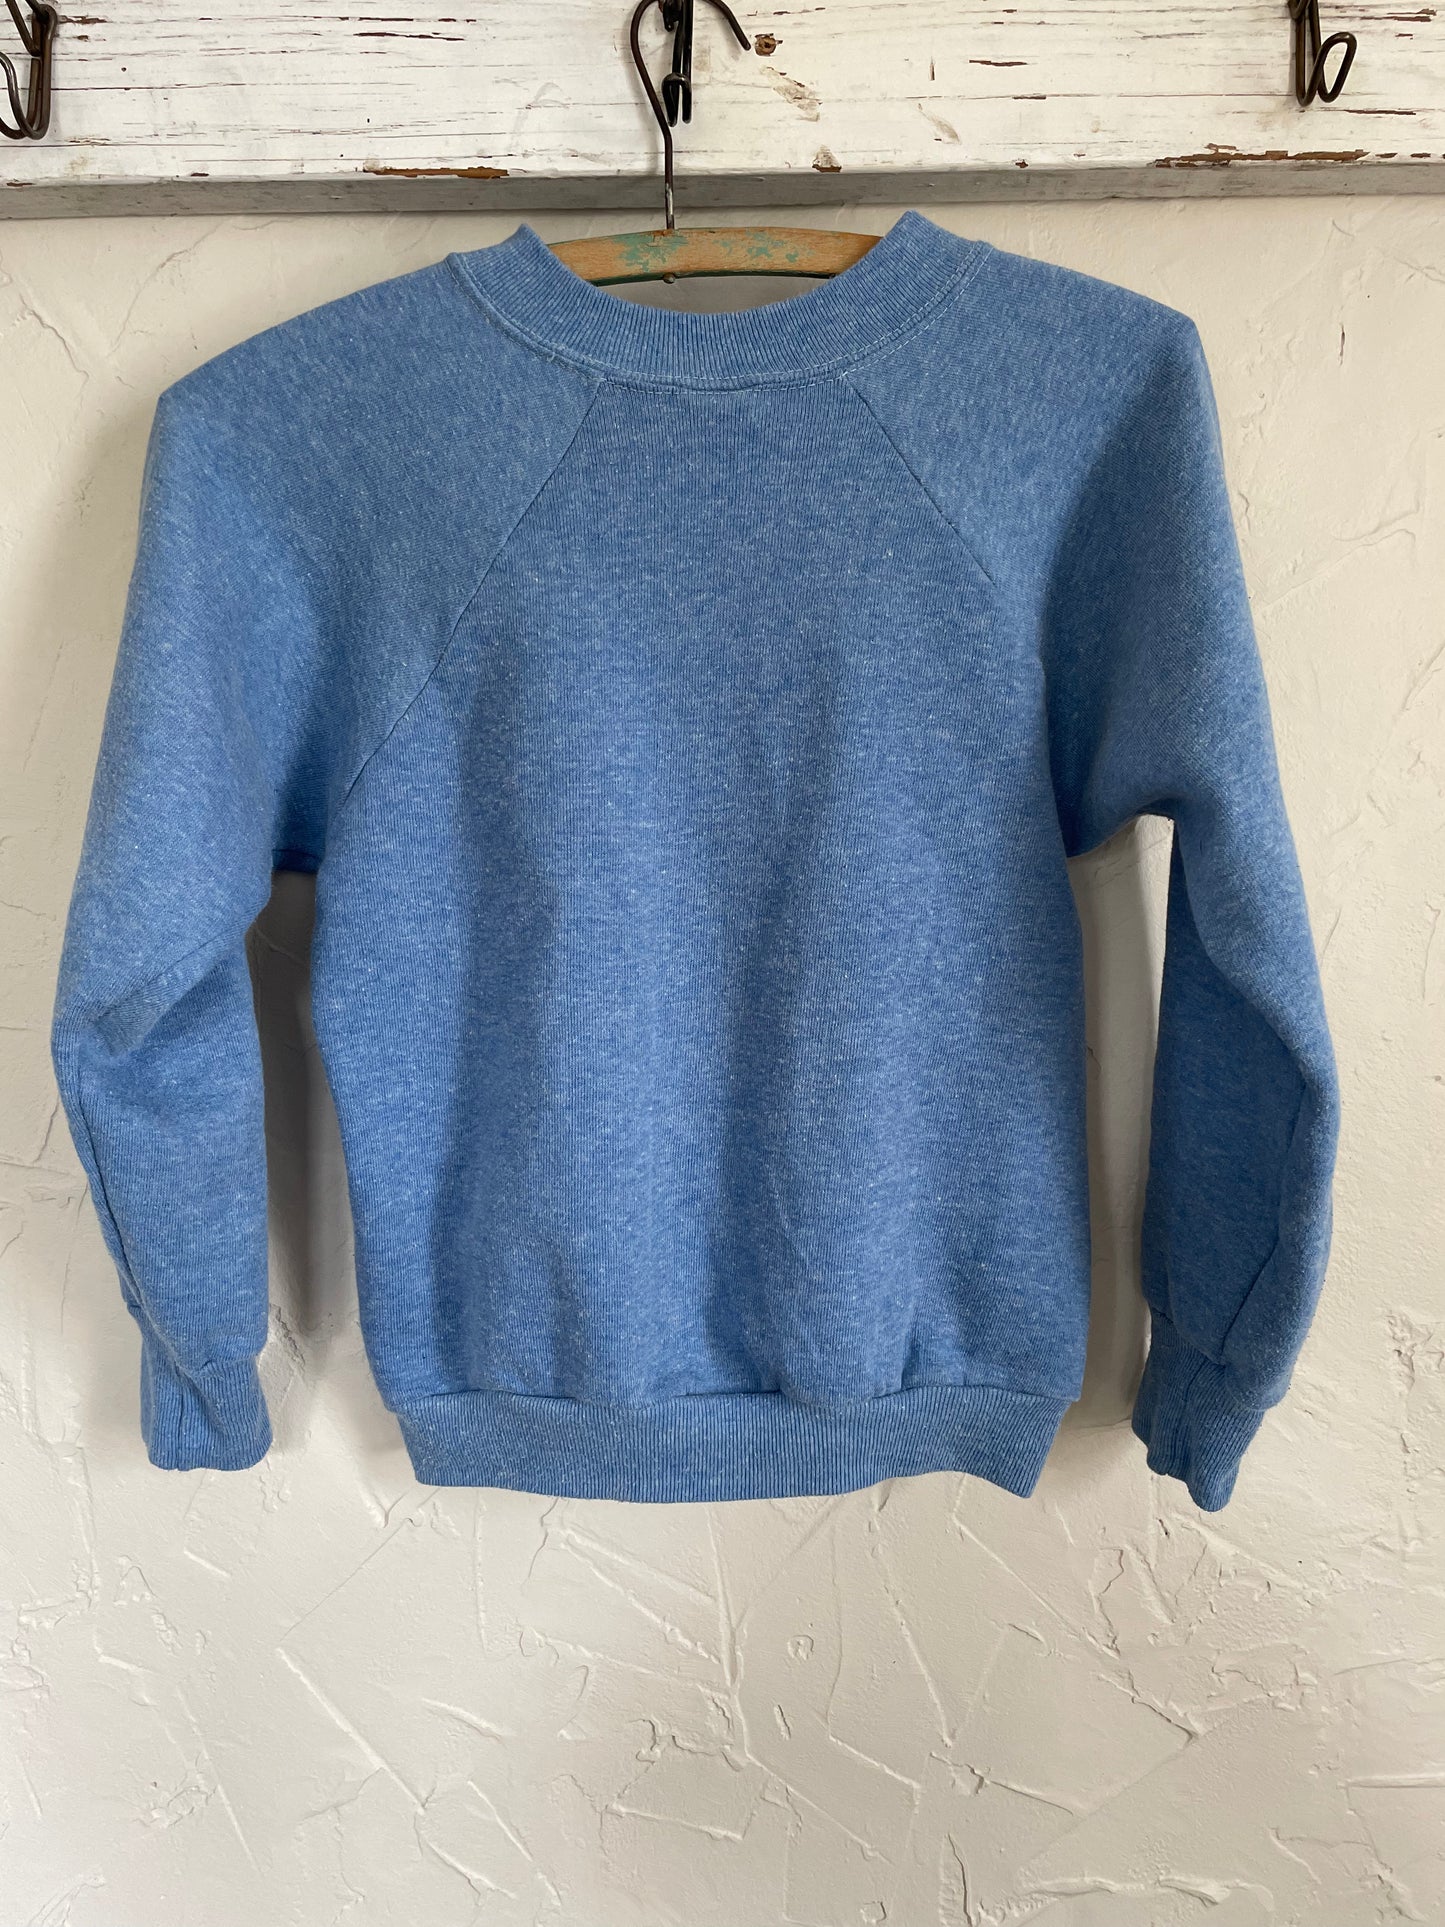 70s Trojans Sweatshirt